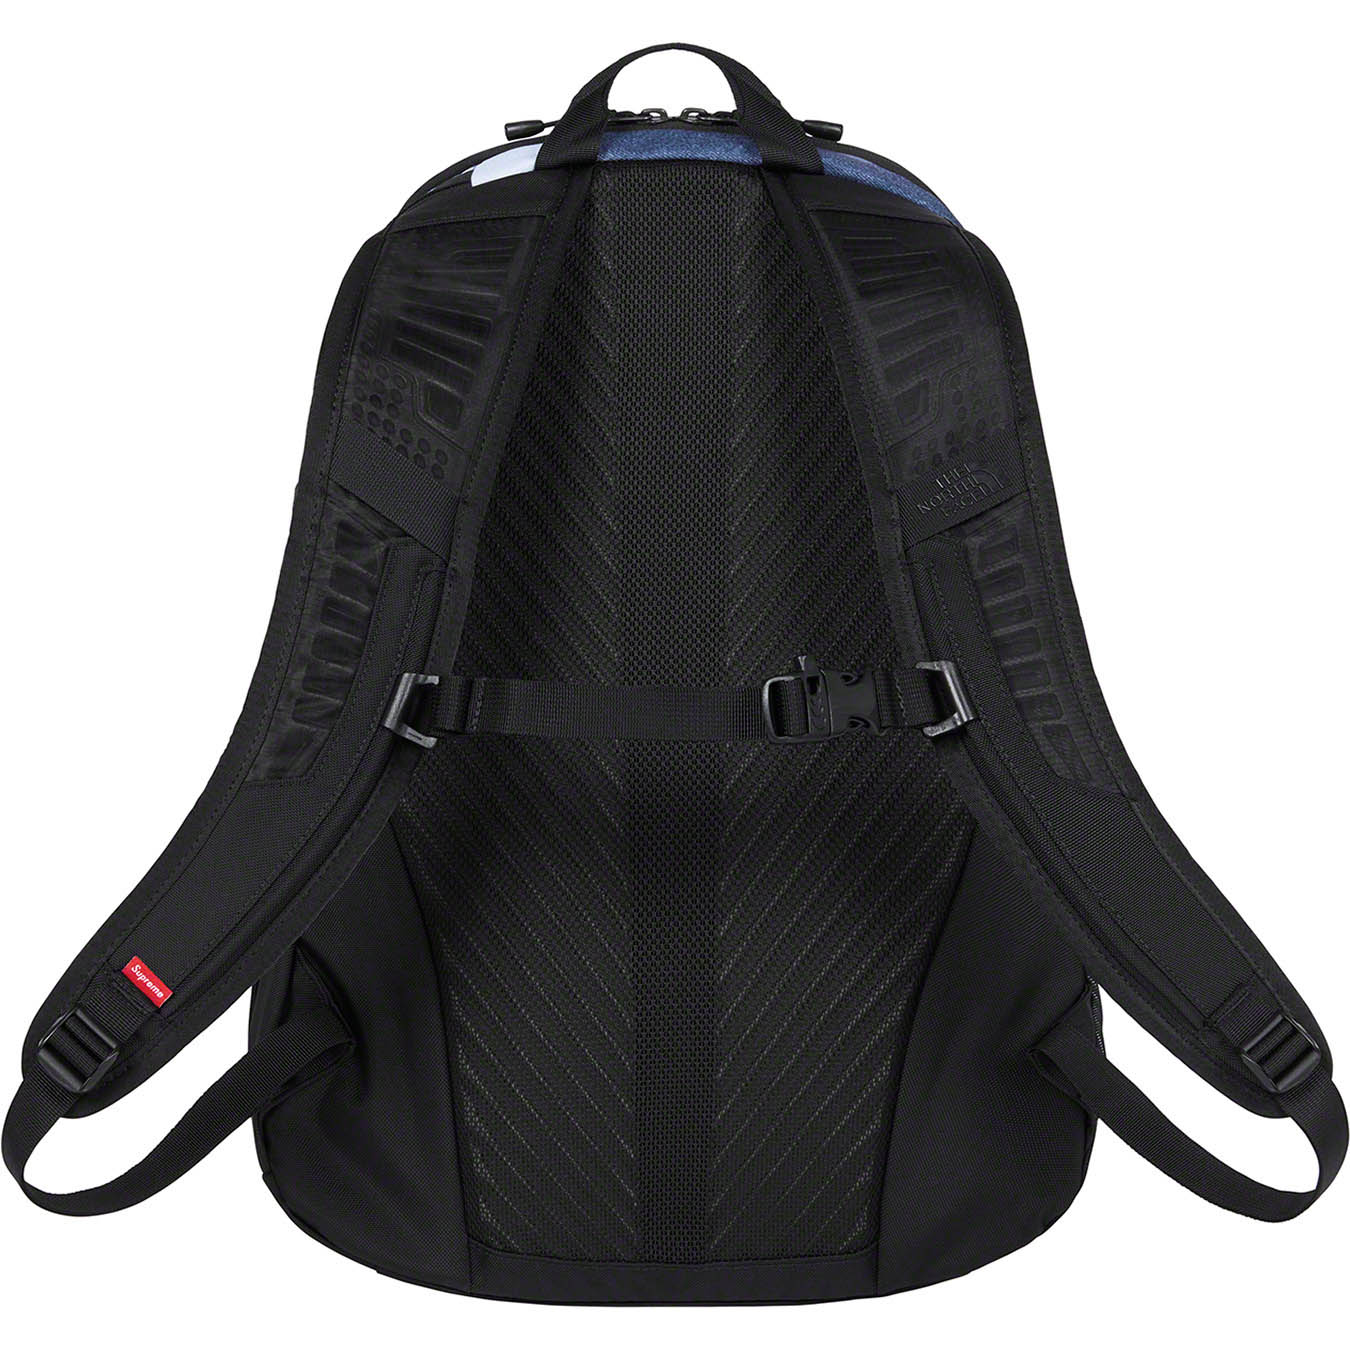 Supreme®/The North Face® Bleached Denim Print Pocono Backpack